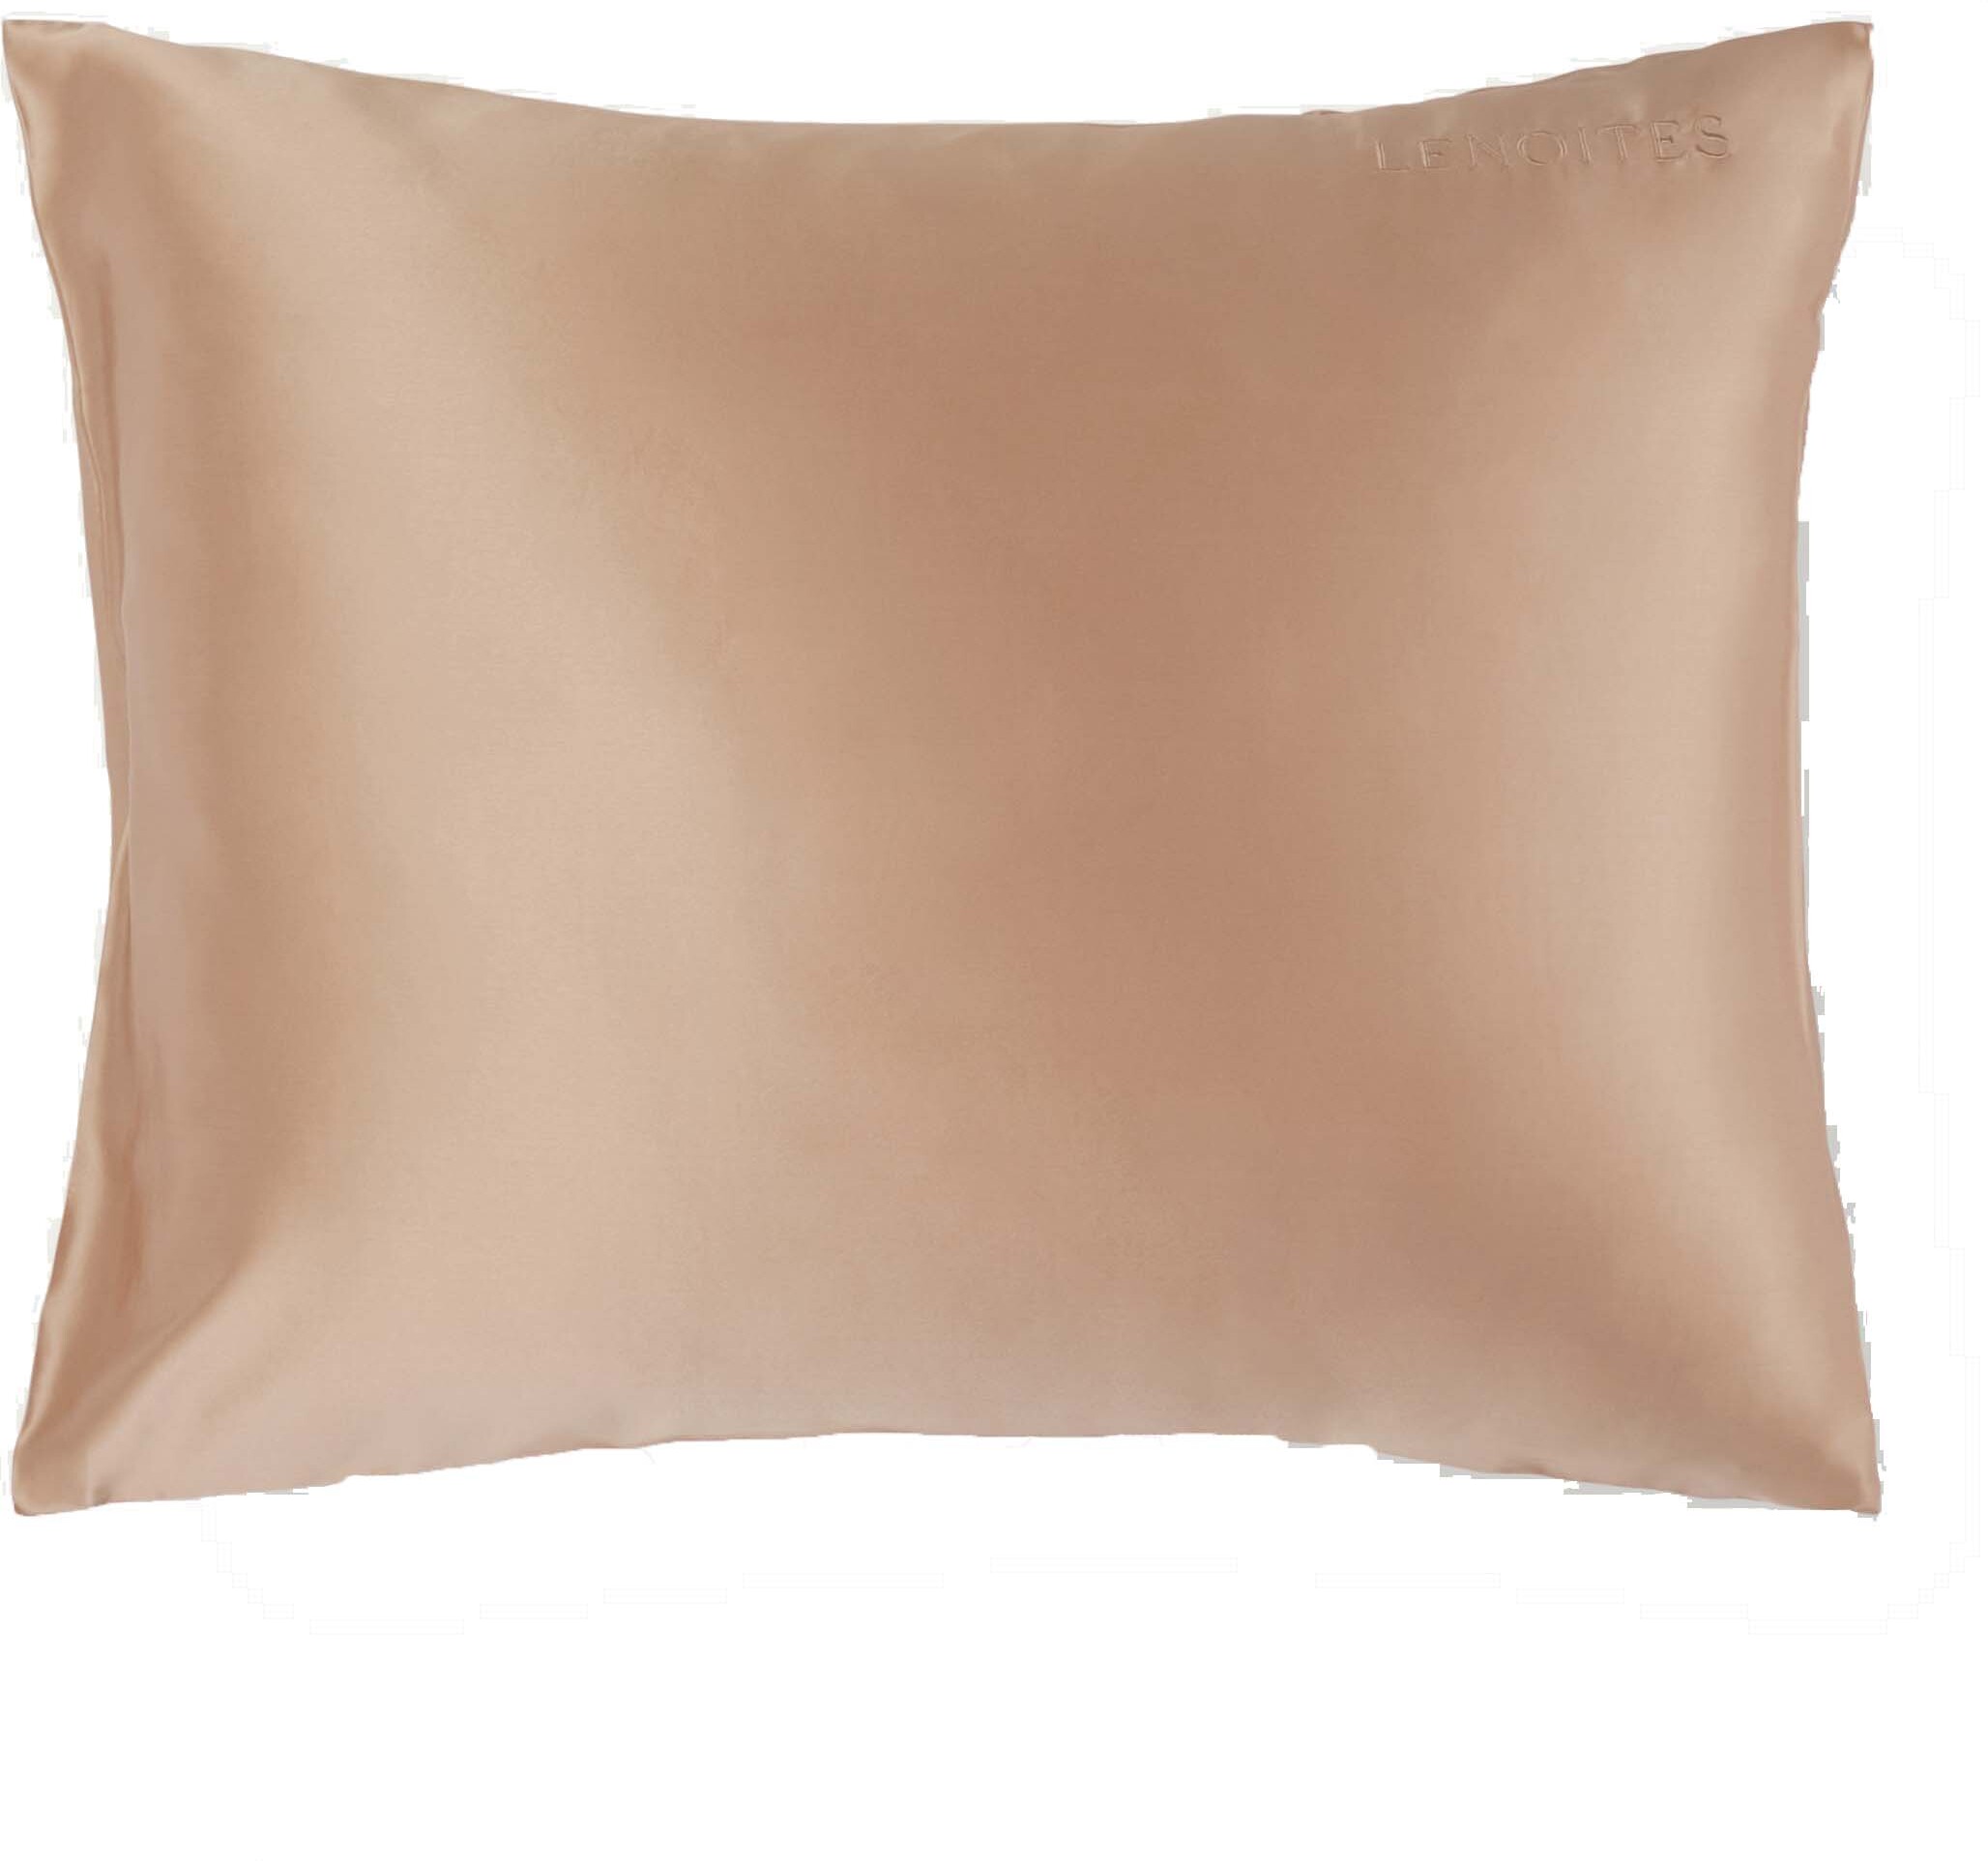 Lenoites Mulberry Silk Pillowcase 50x60 cm Rosegold